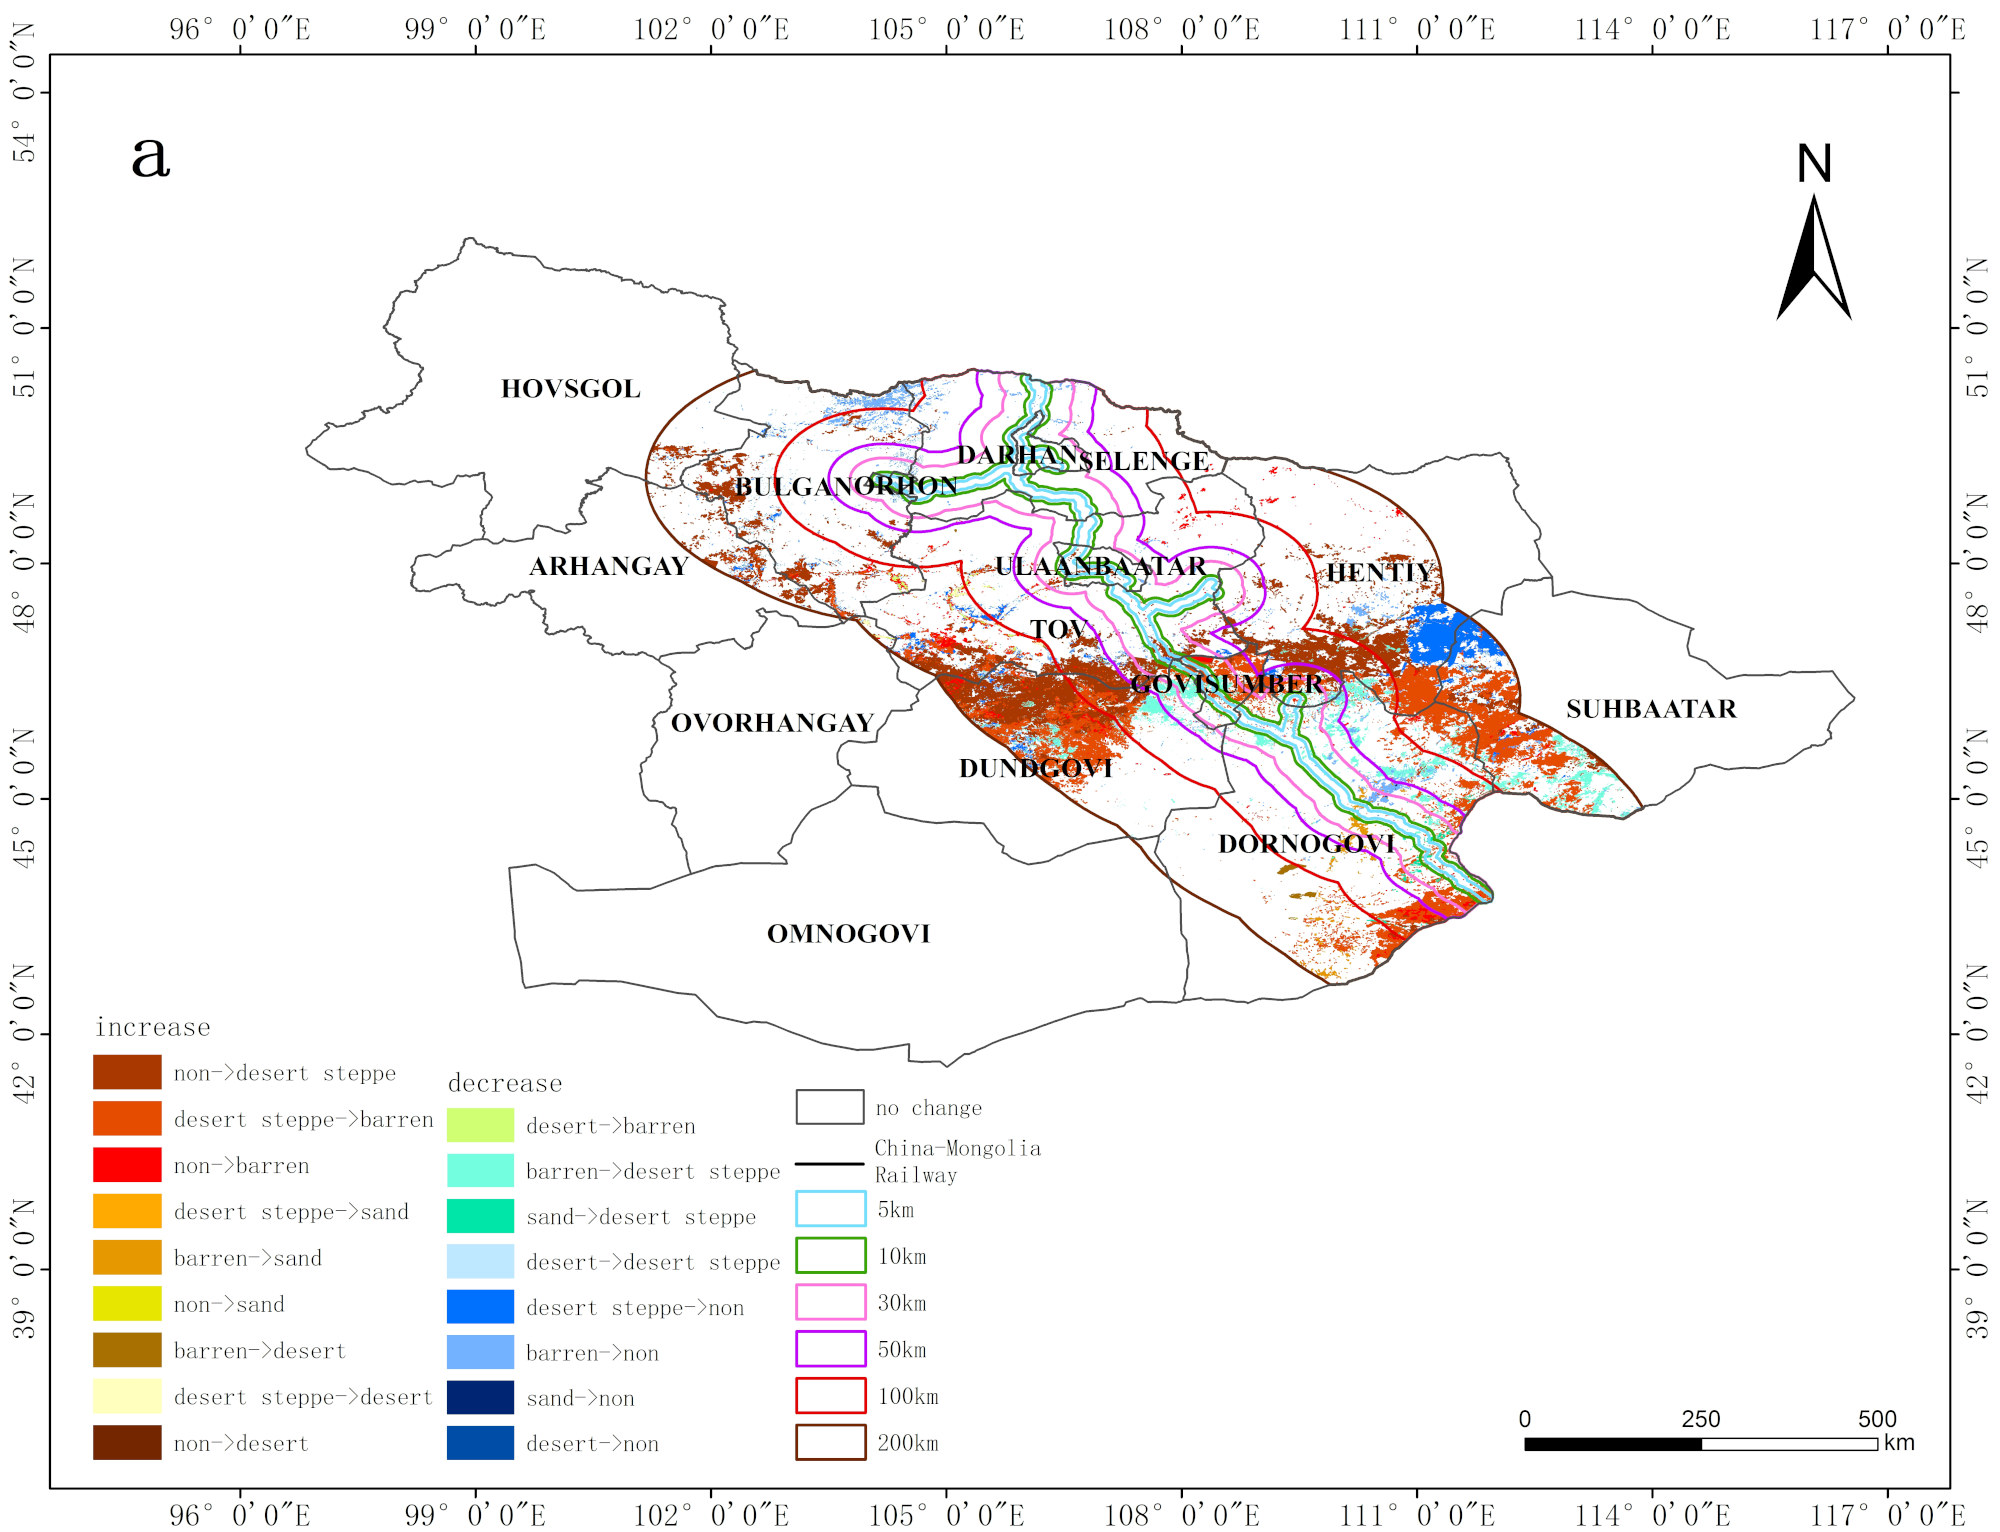 Land degradation data set along the China-Mongolia Railway (Mongolia section)